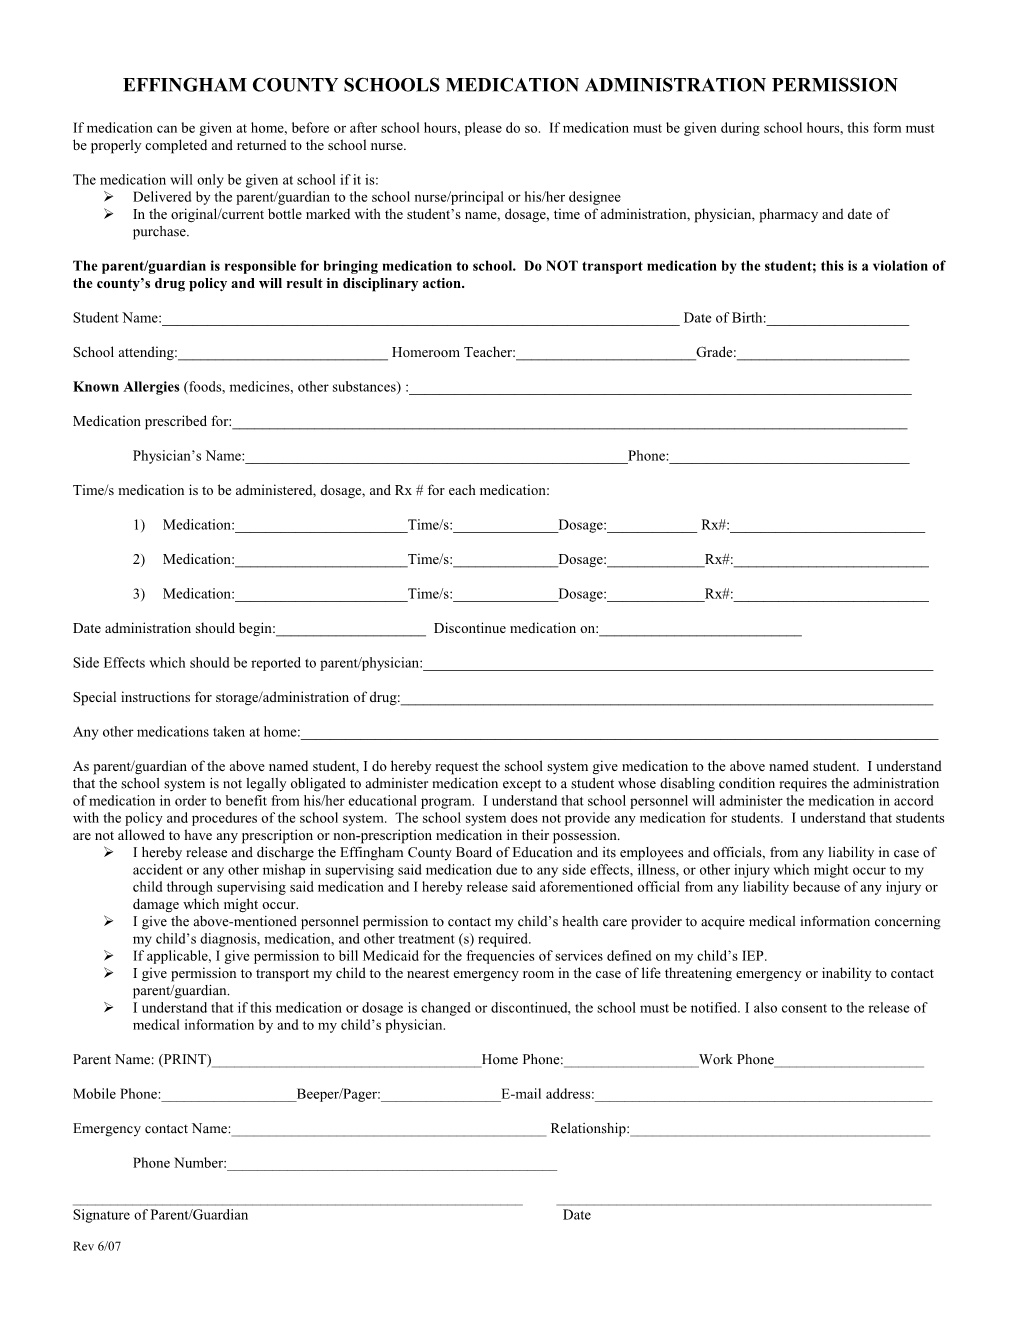 Effingham County Schools Medication Administration Permission